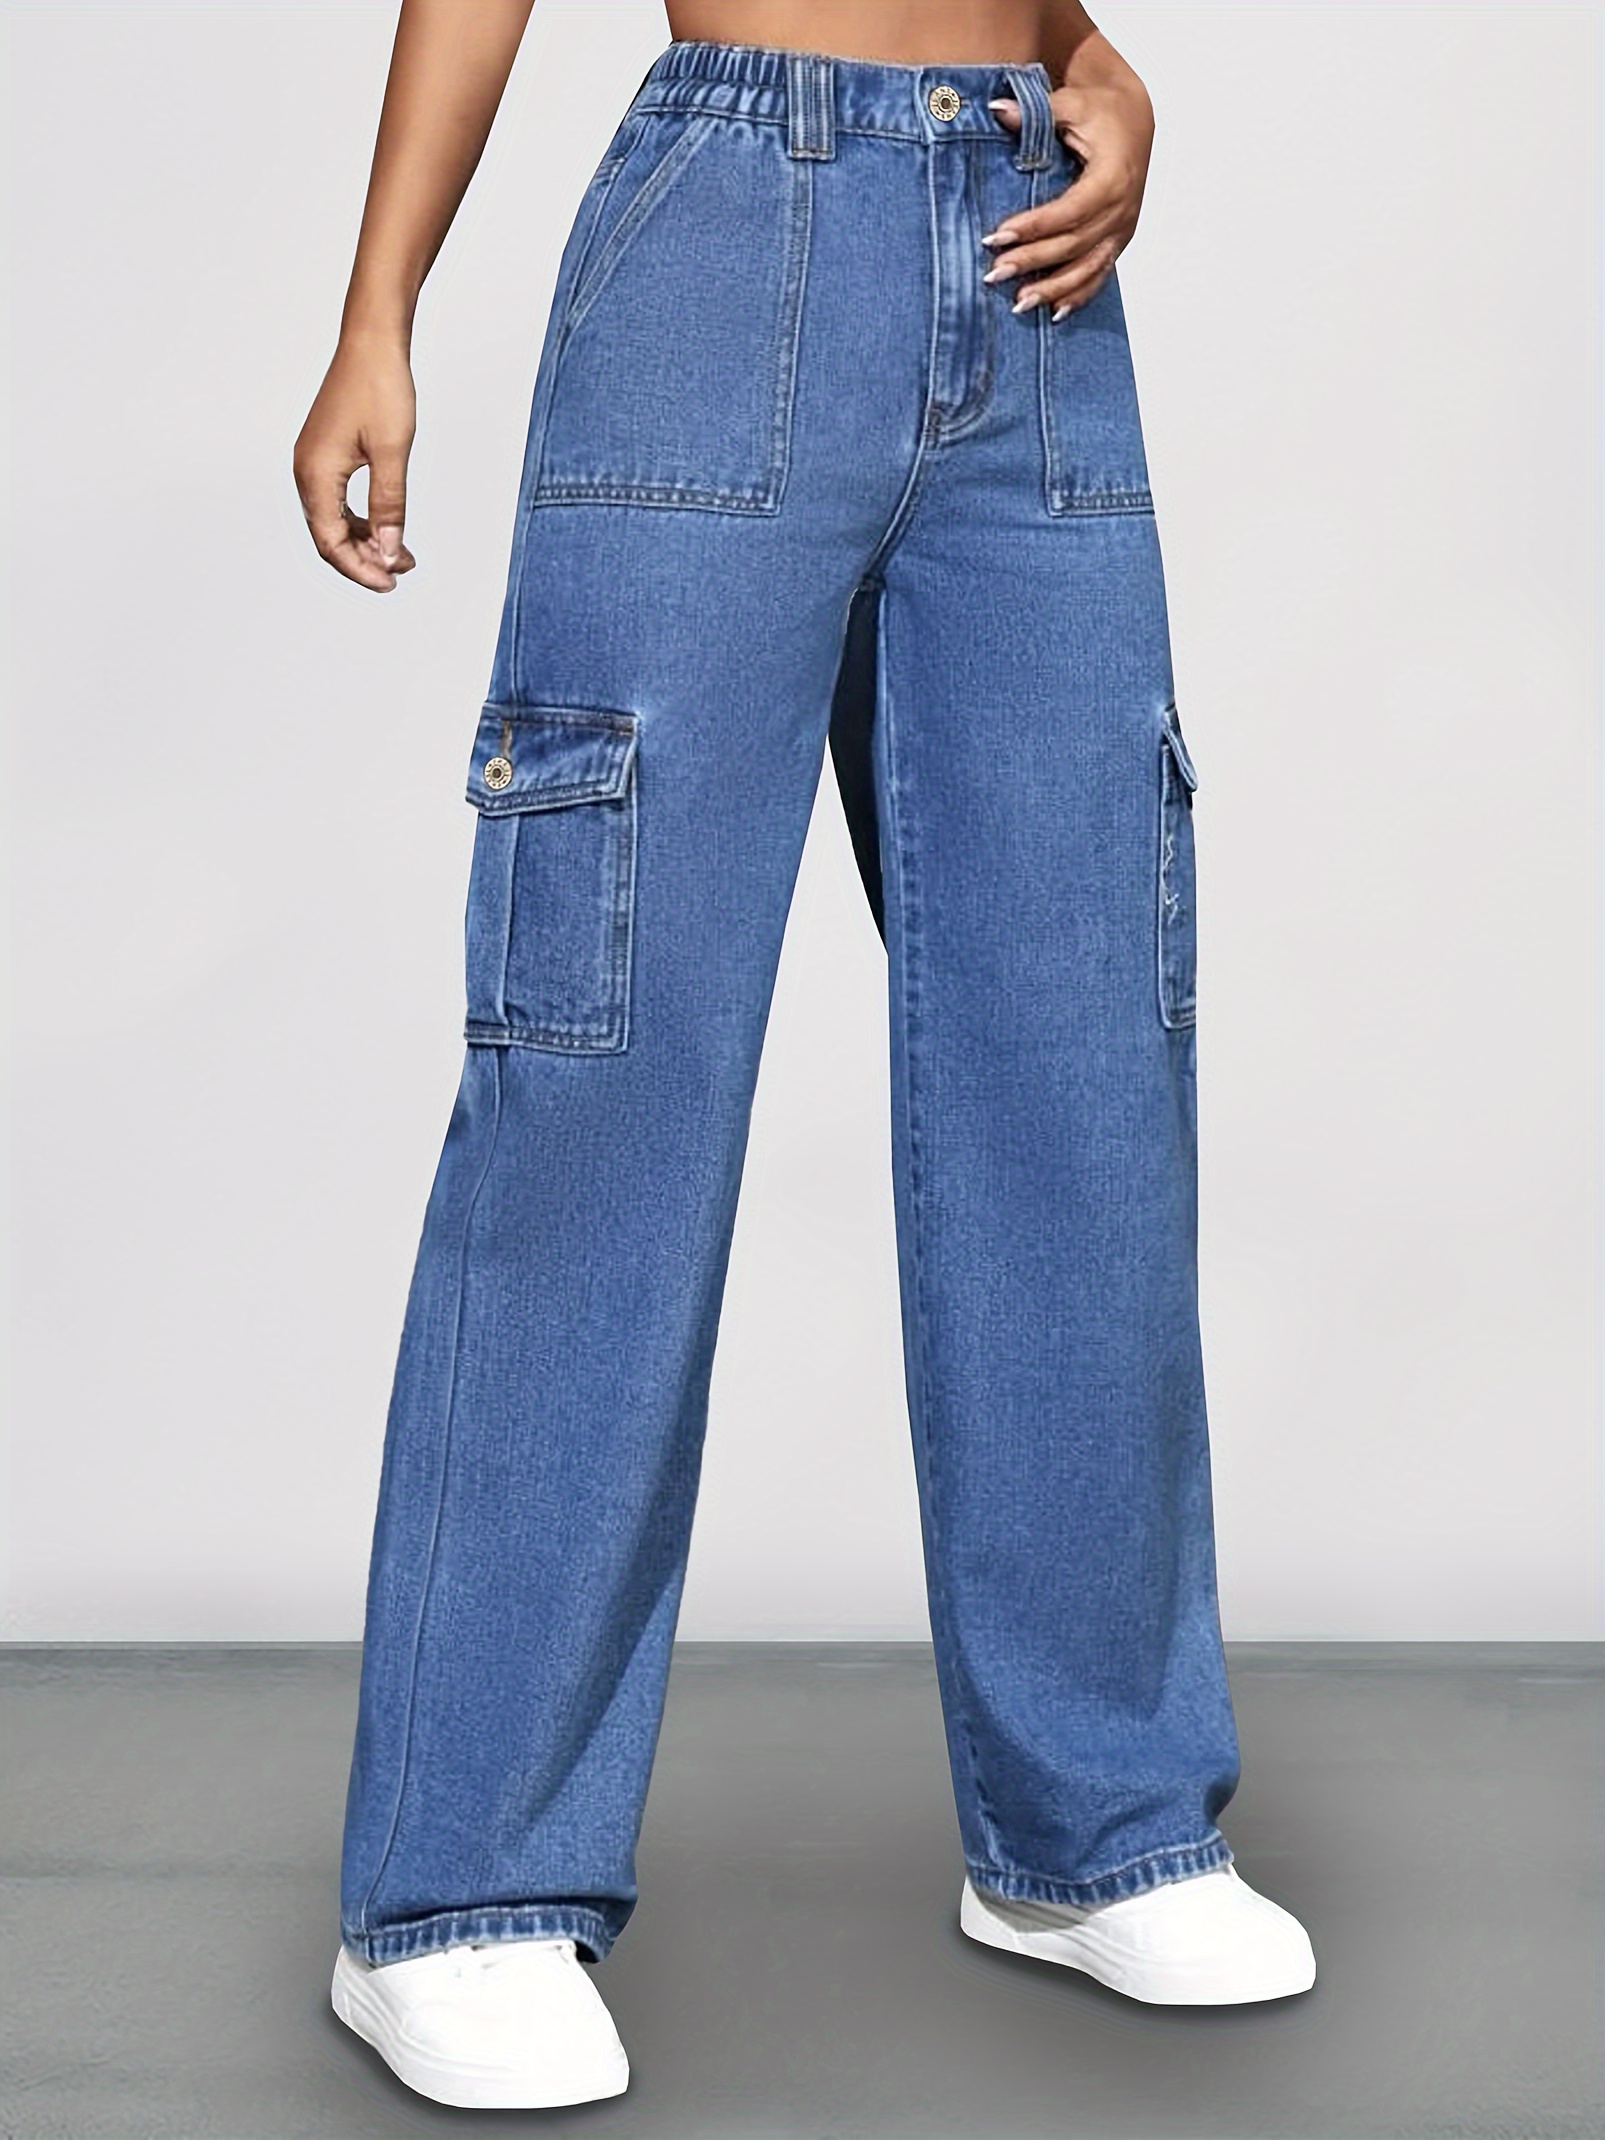 Women's Cargo Pants Elastic High Waist Baggy Cargo Jeans Flap Pocket  Straight Casual Y2K Streetwear Trousers.